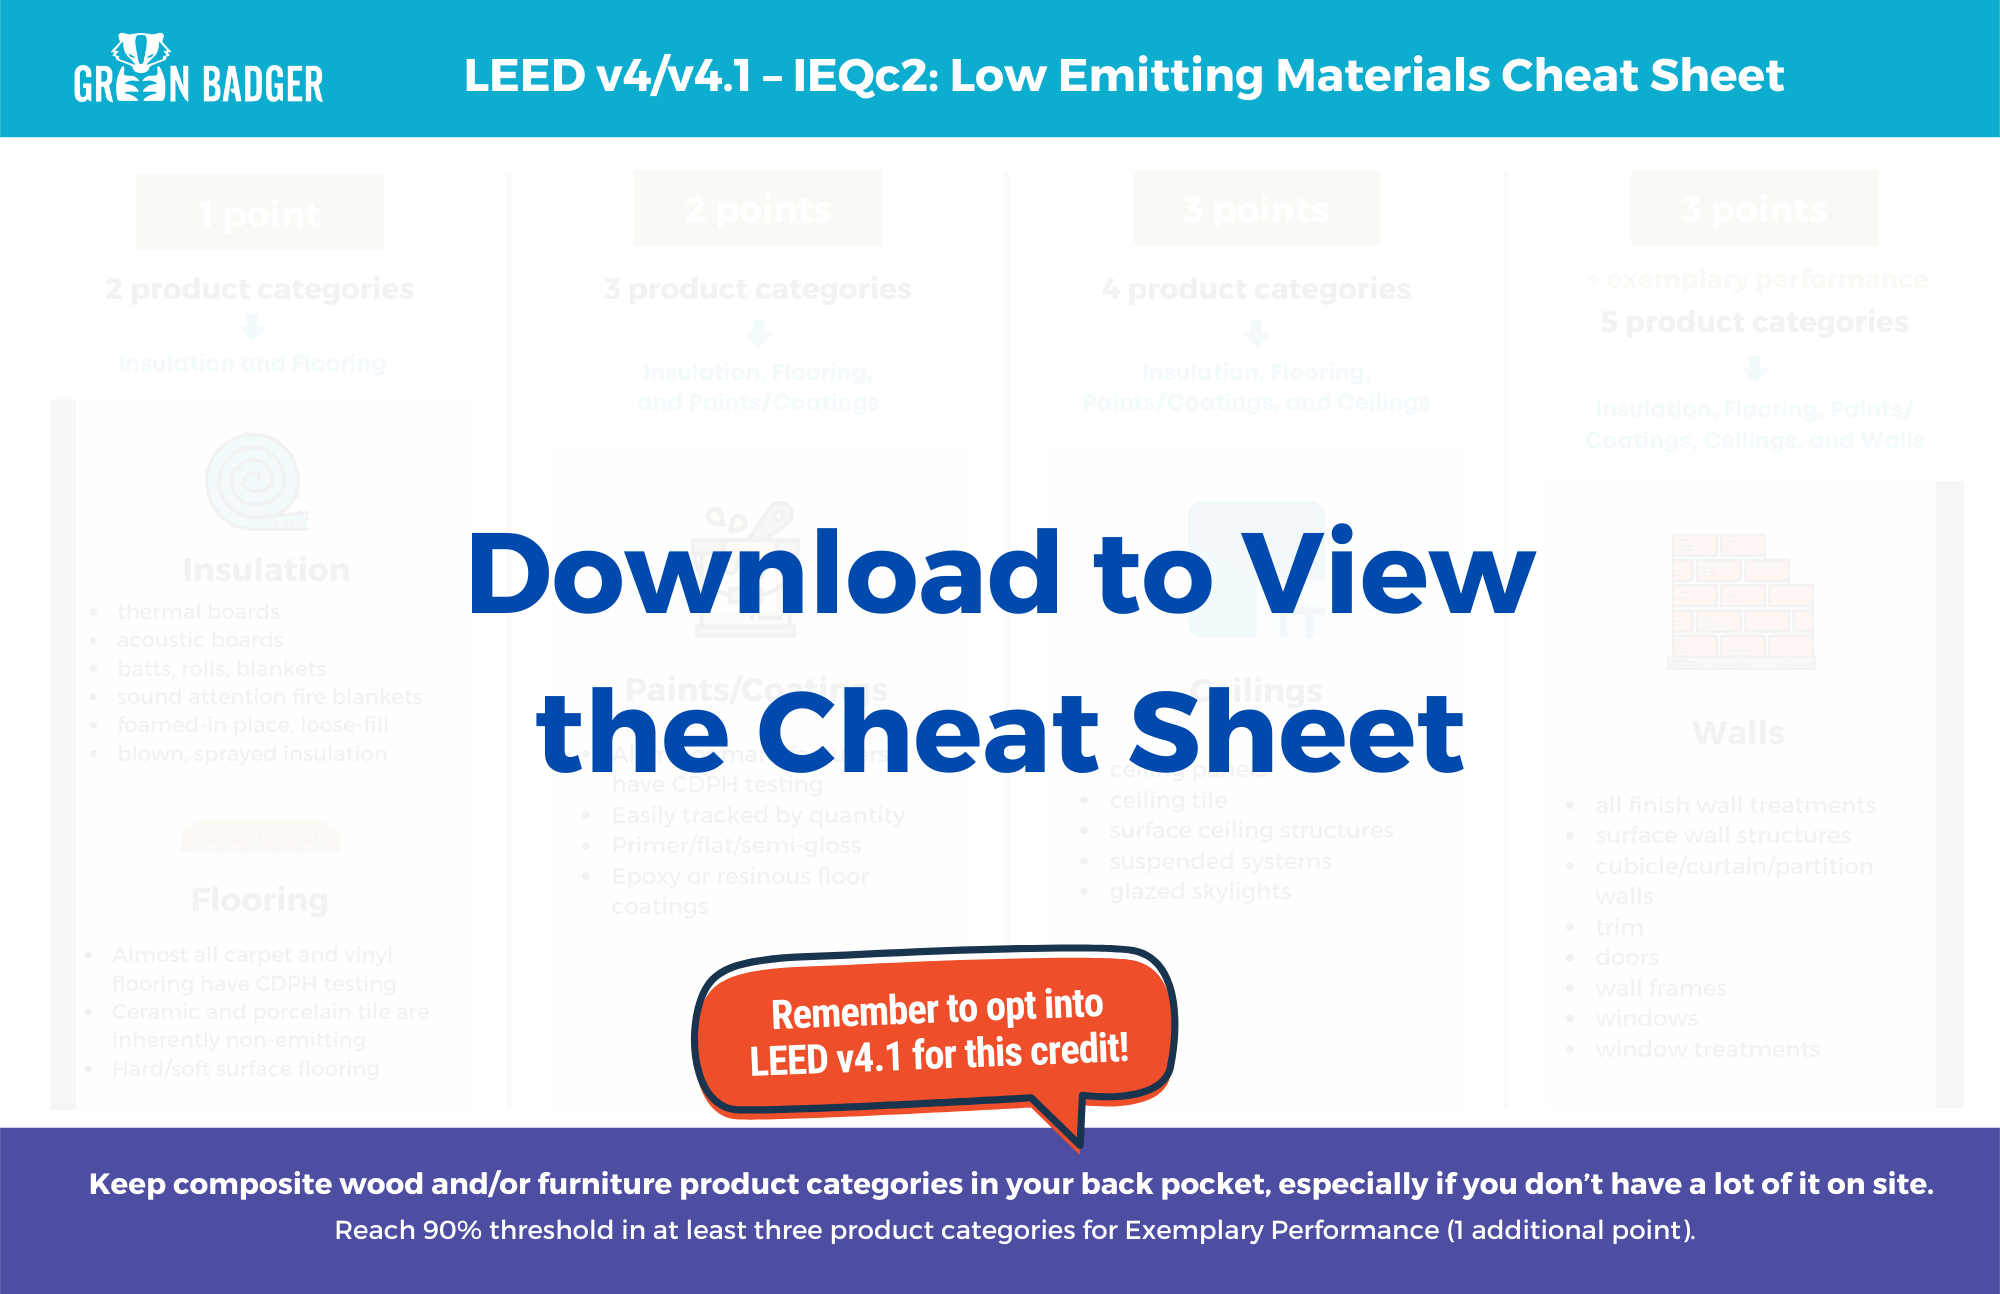 IEQc2: Low Emitting Materials Cheat Sheet